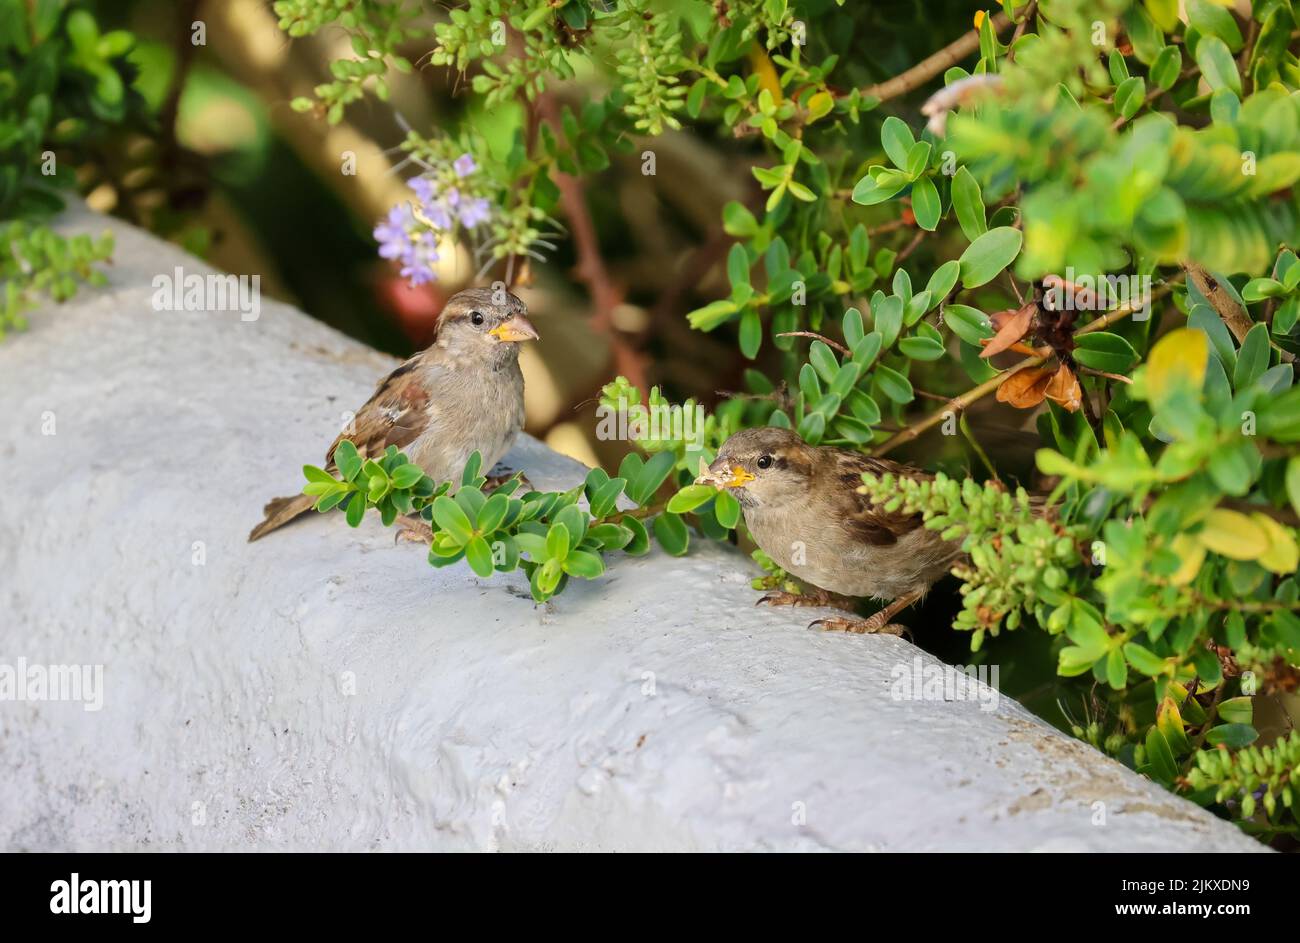 Two House sparrow chicks 'Passer domesticus' sitting on wall beneath green shrub. One funny bird has food in beak. Dublin, Ireland Stock Photo